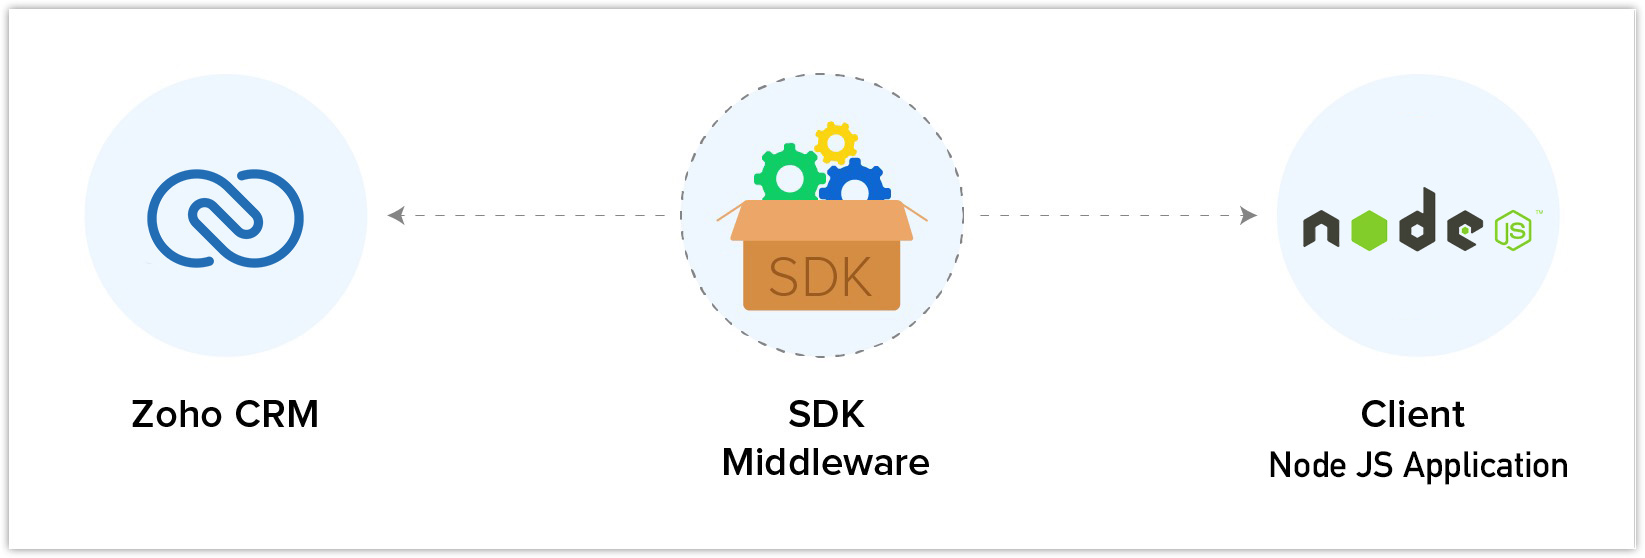 C Sharp SDK Middleware Image